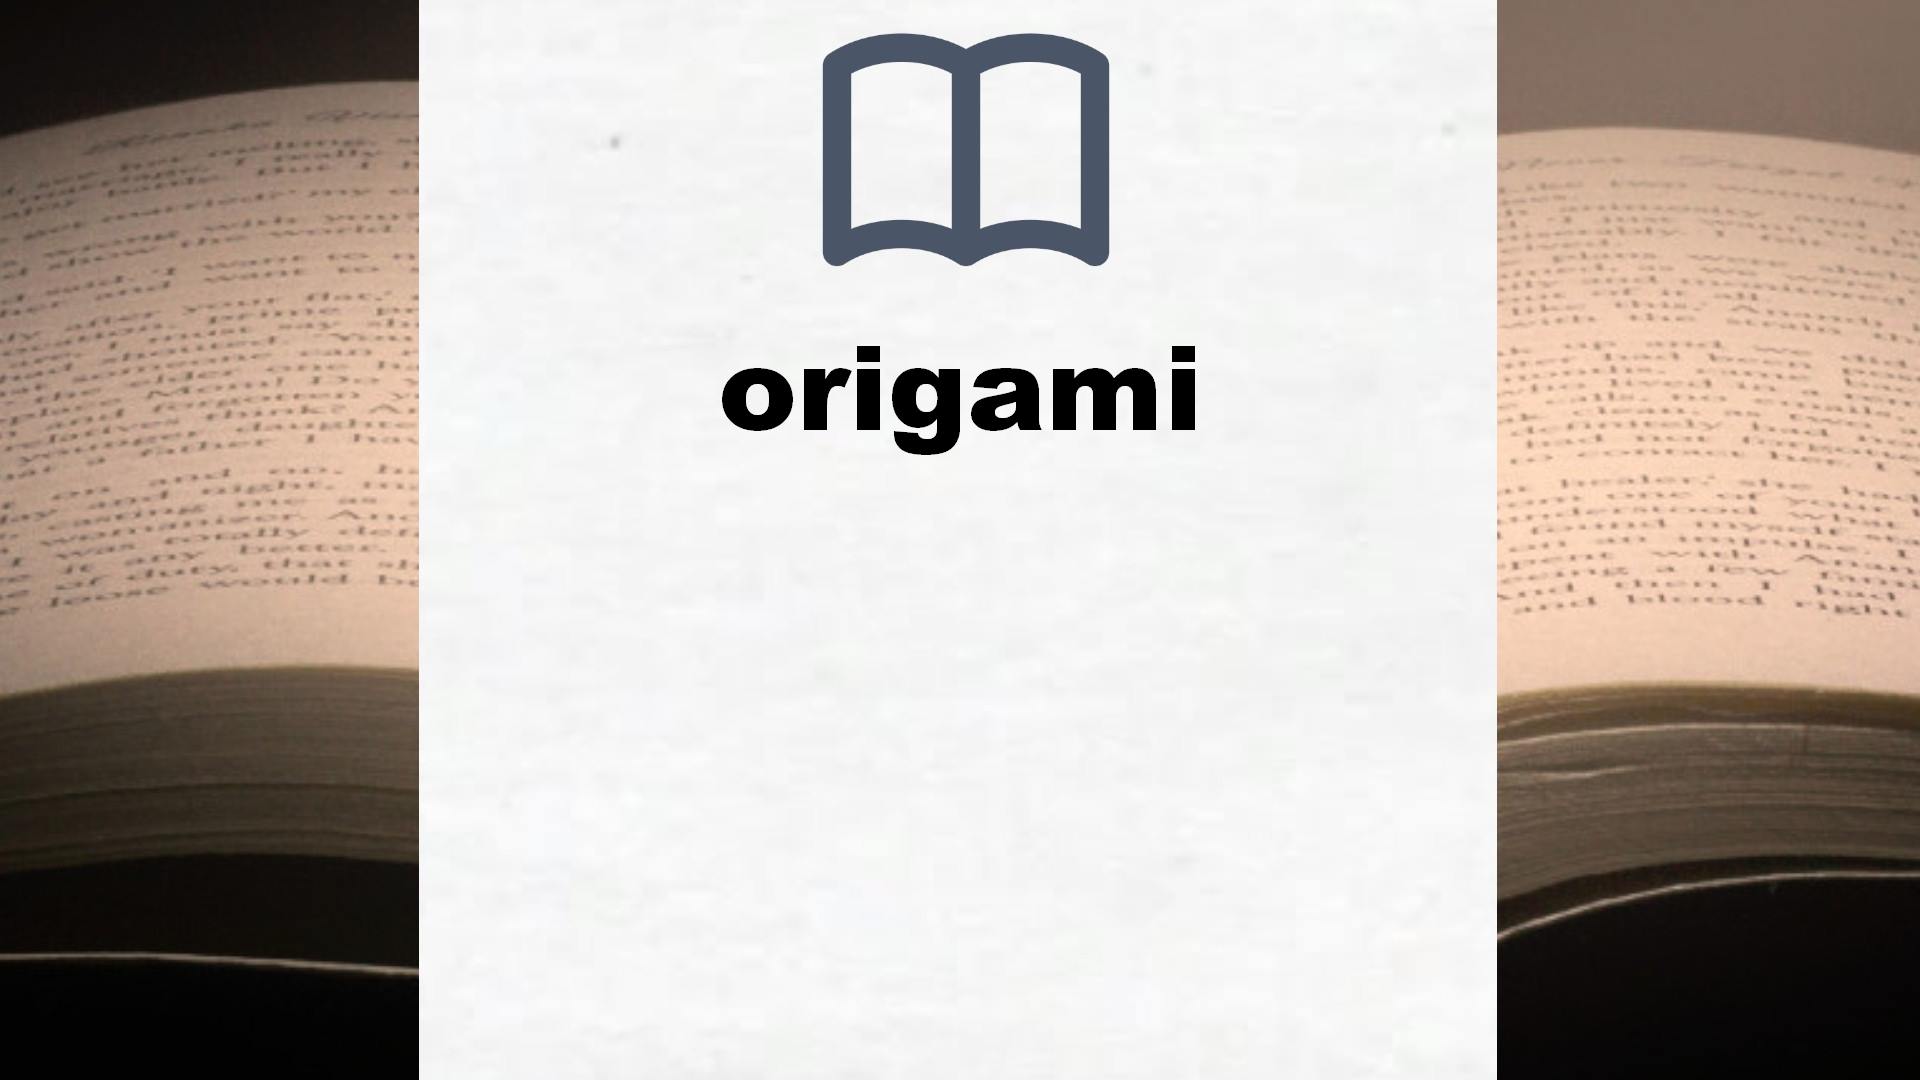 Libros sobre origami